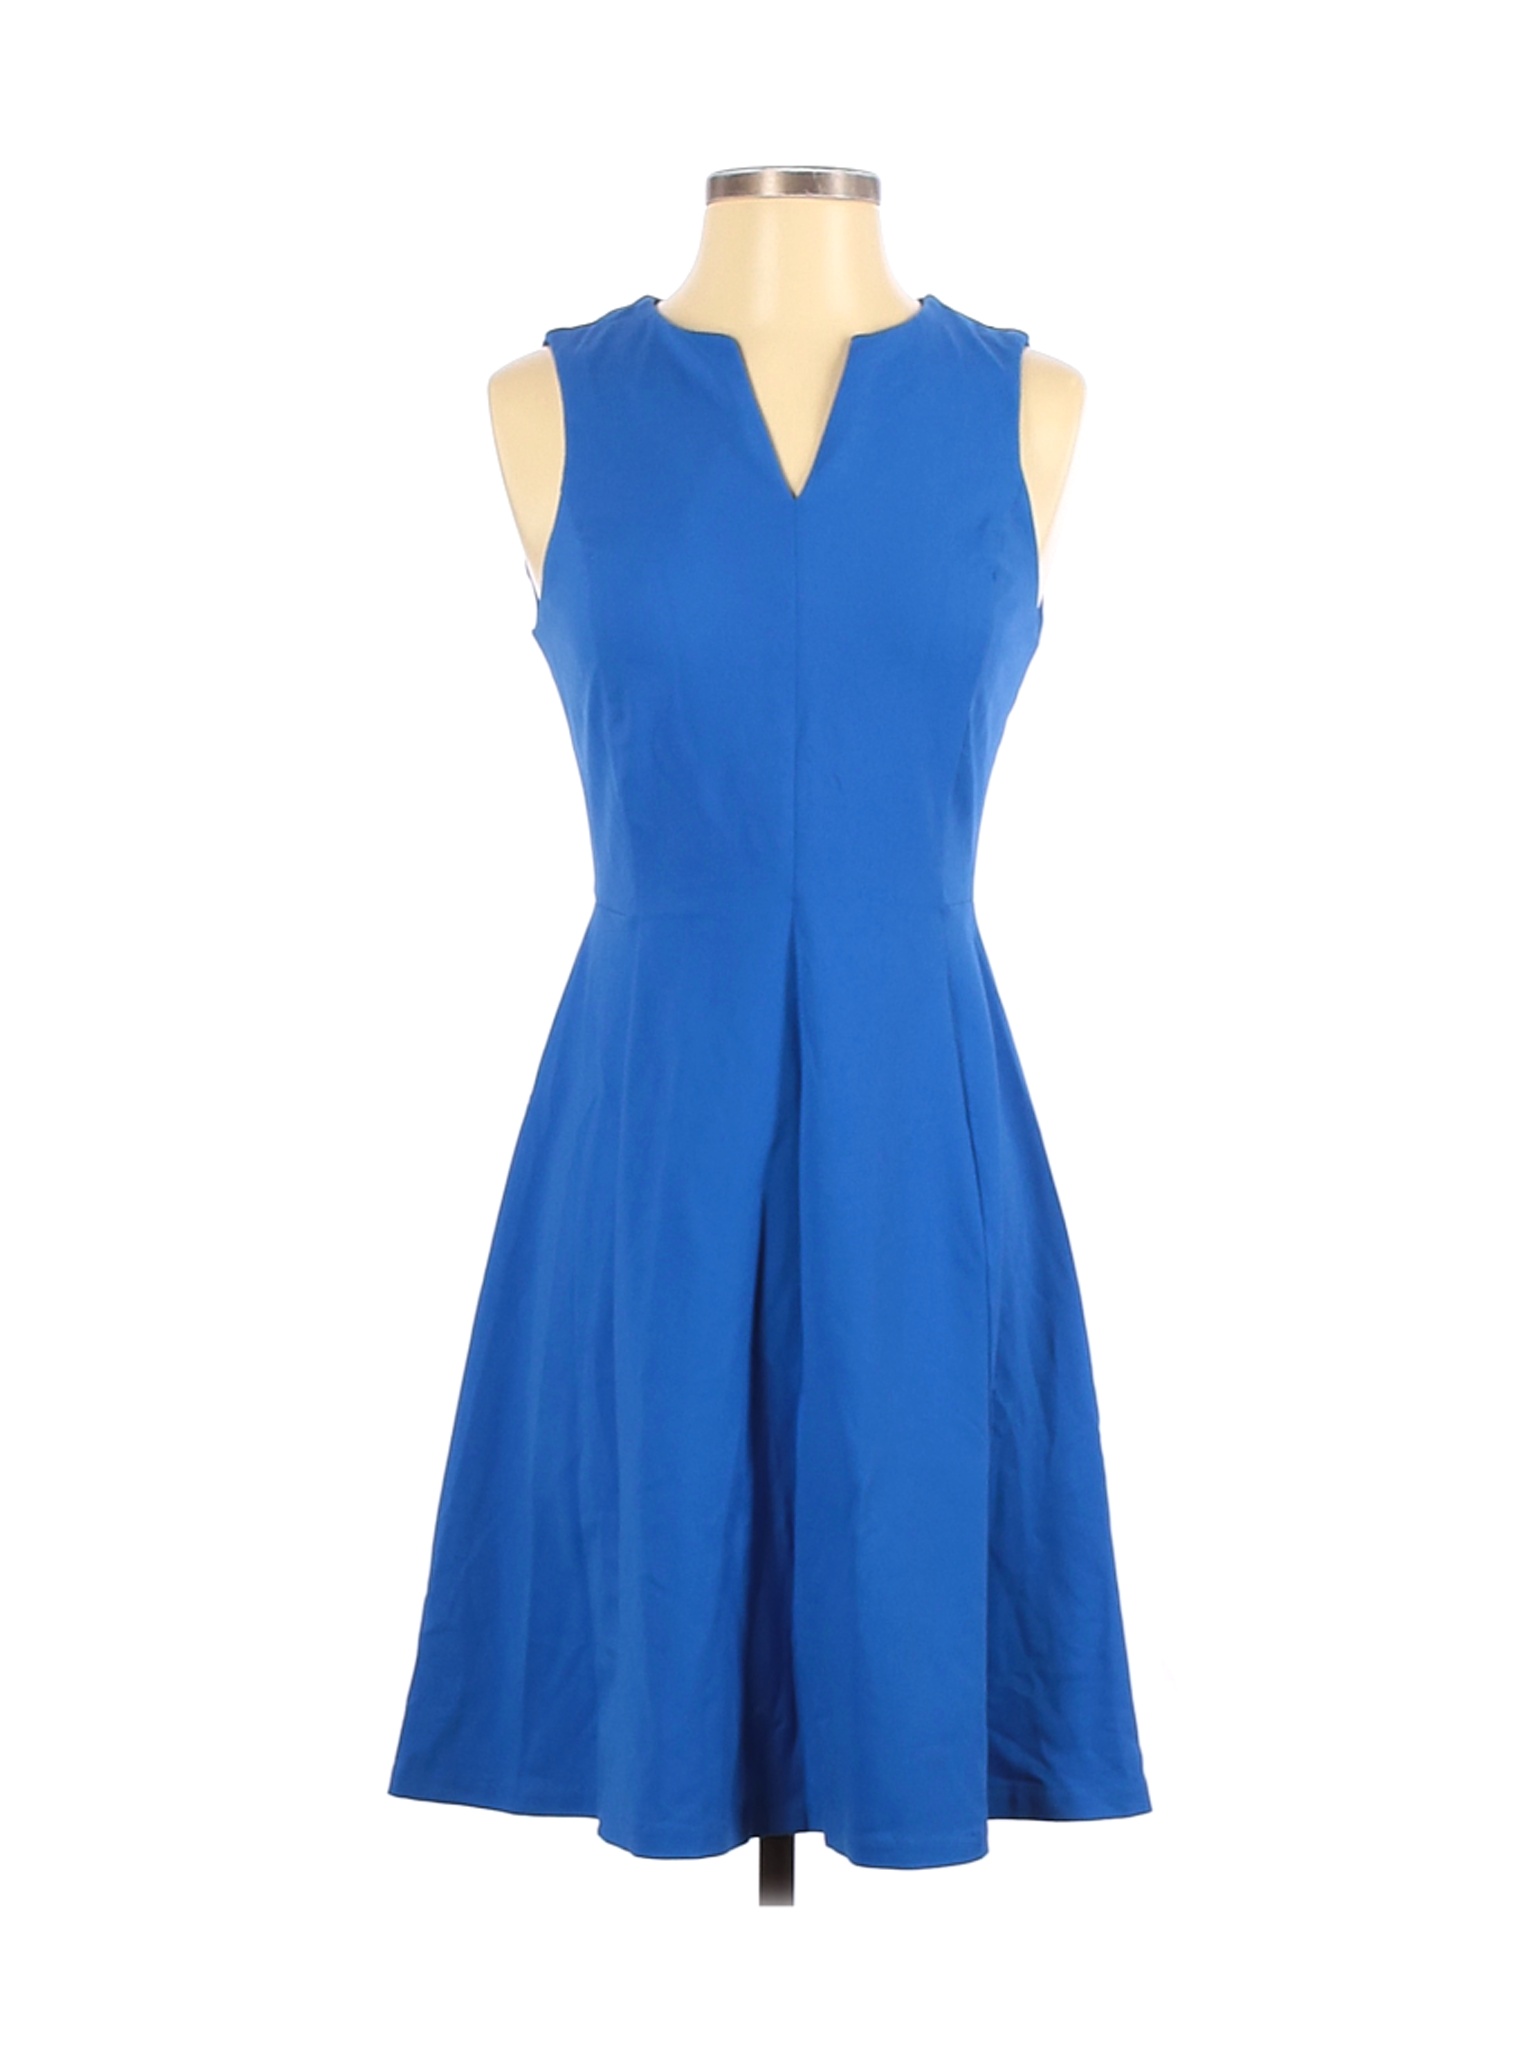 Cynthia Rowley TJX Women Blue Casual Dress S | eBay